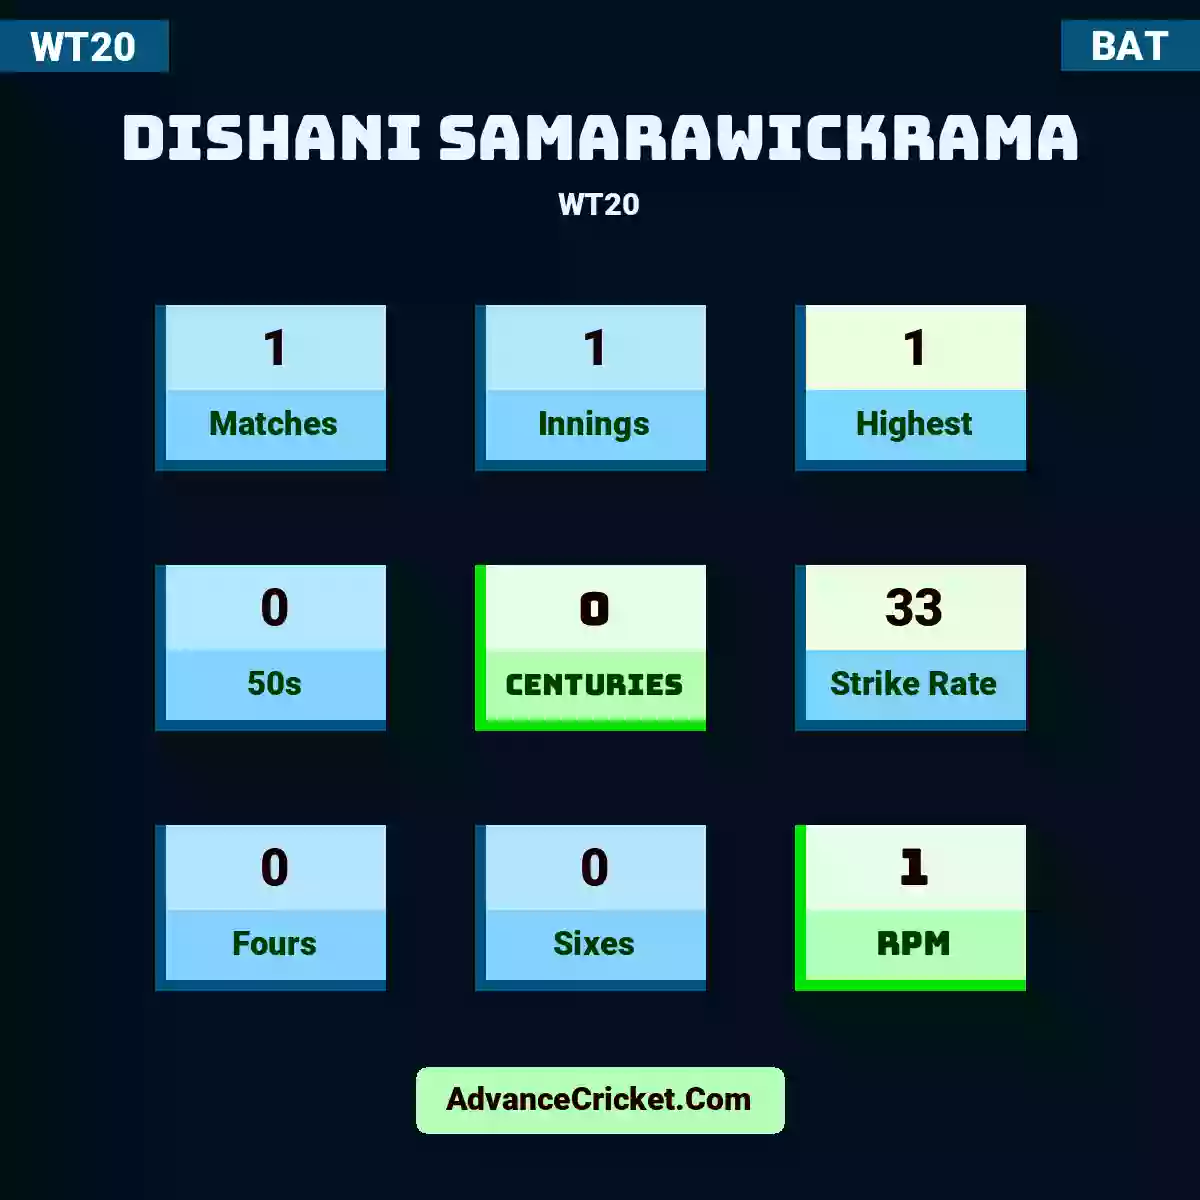 Dishani Samarawickrama WT20 , Dishani Samarawickrama played 1 matches, scored 1 runs as highest, 0 half-centuries, and 0 centuries, with a strike rate of 33. D.Samarawickrama hit 0 fours and 0 sixes, with an RPM of 1.